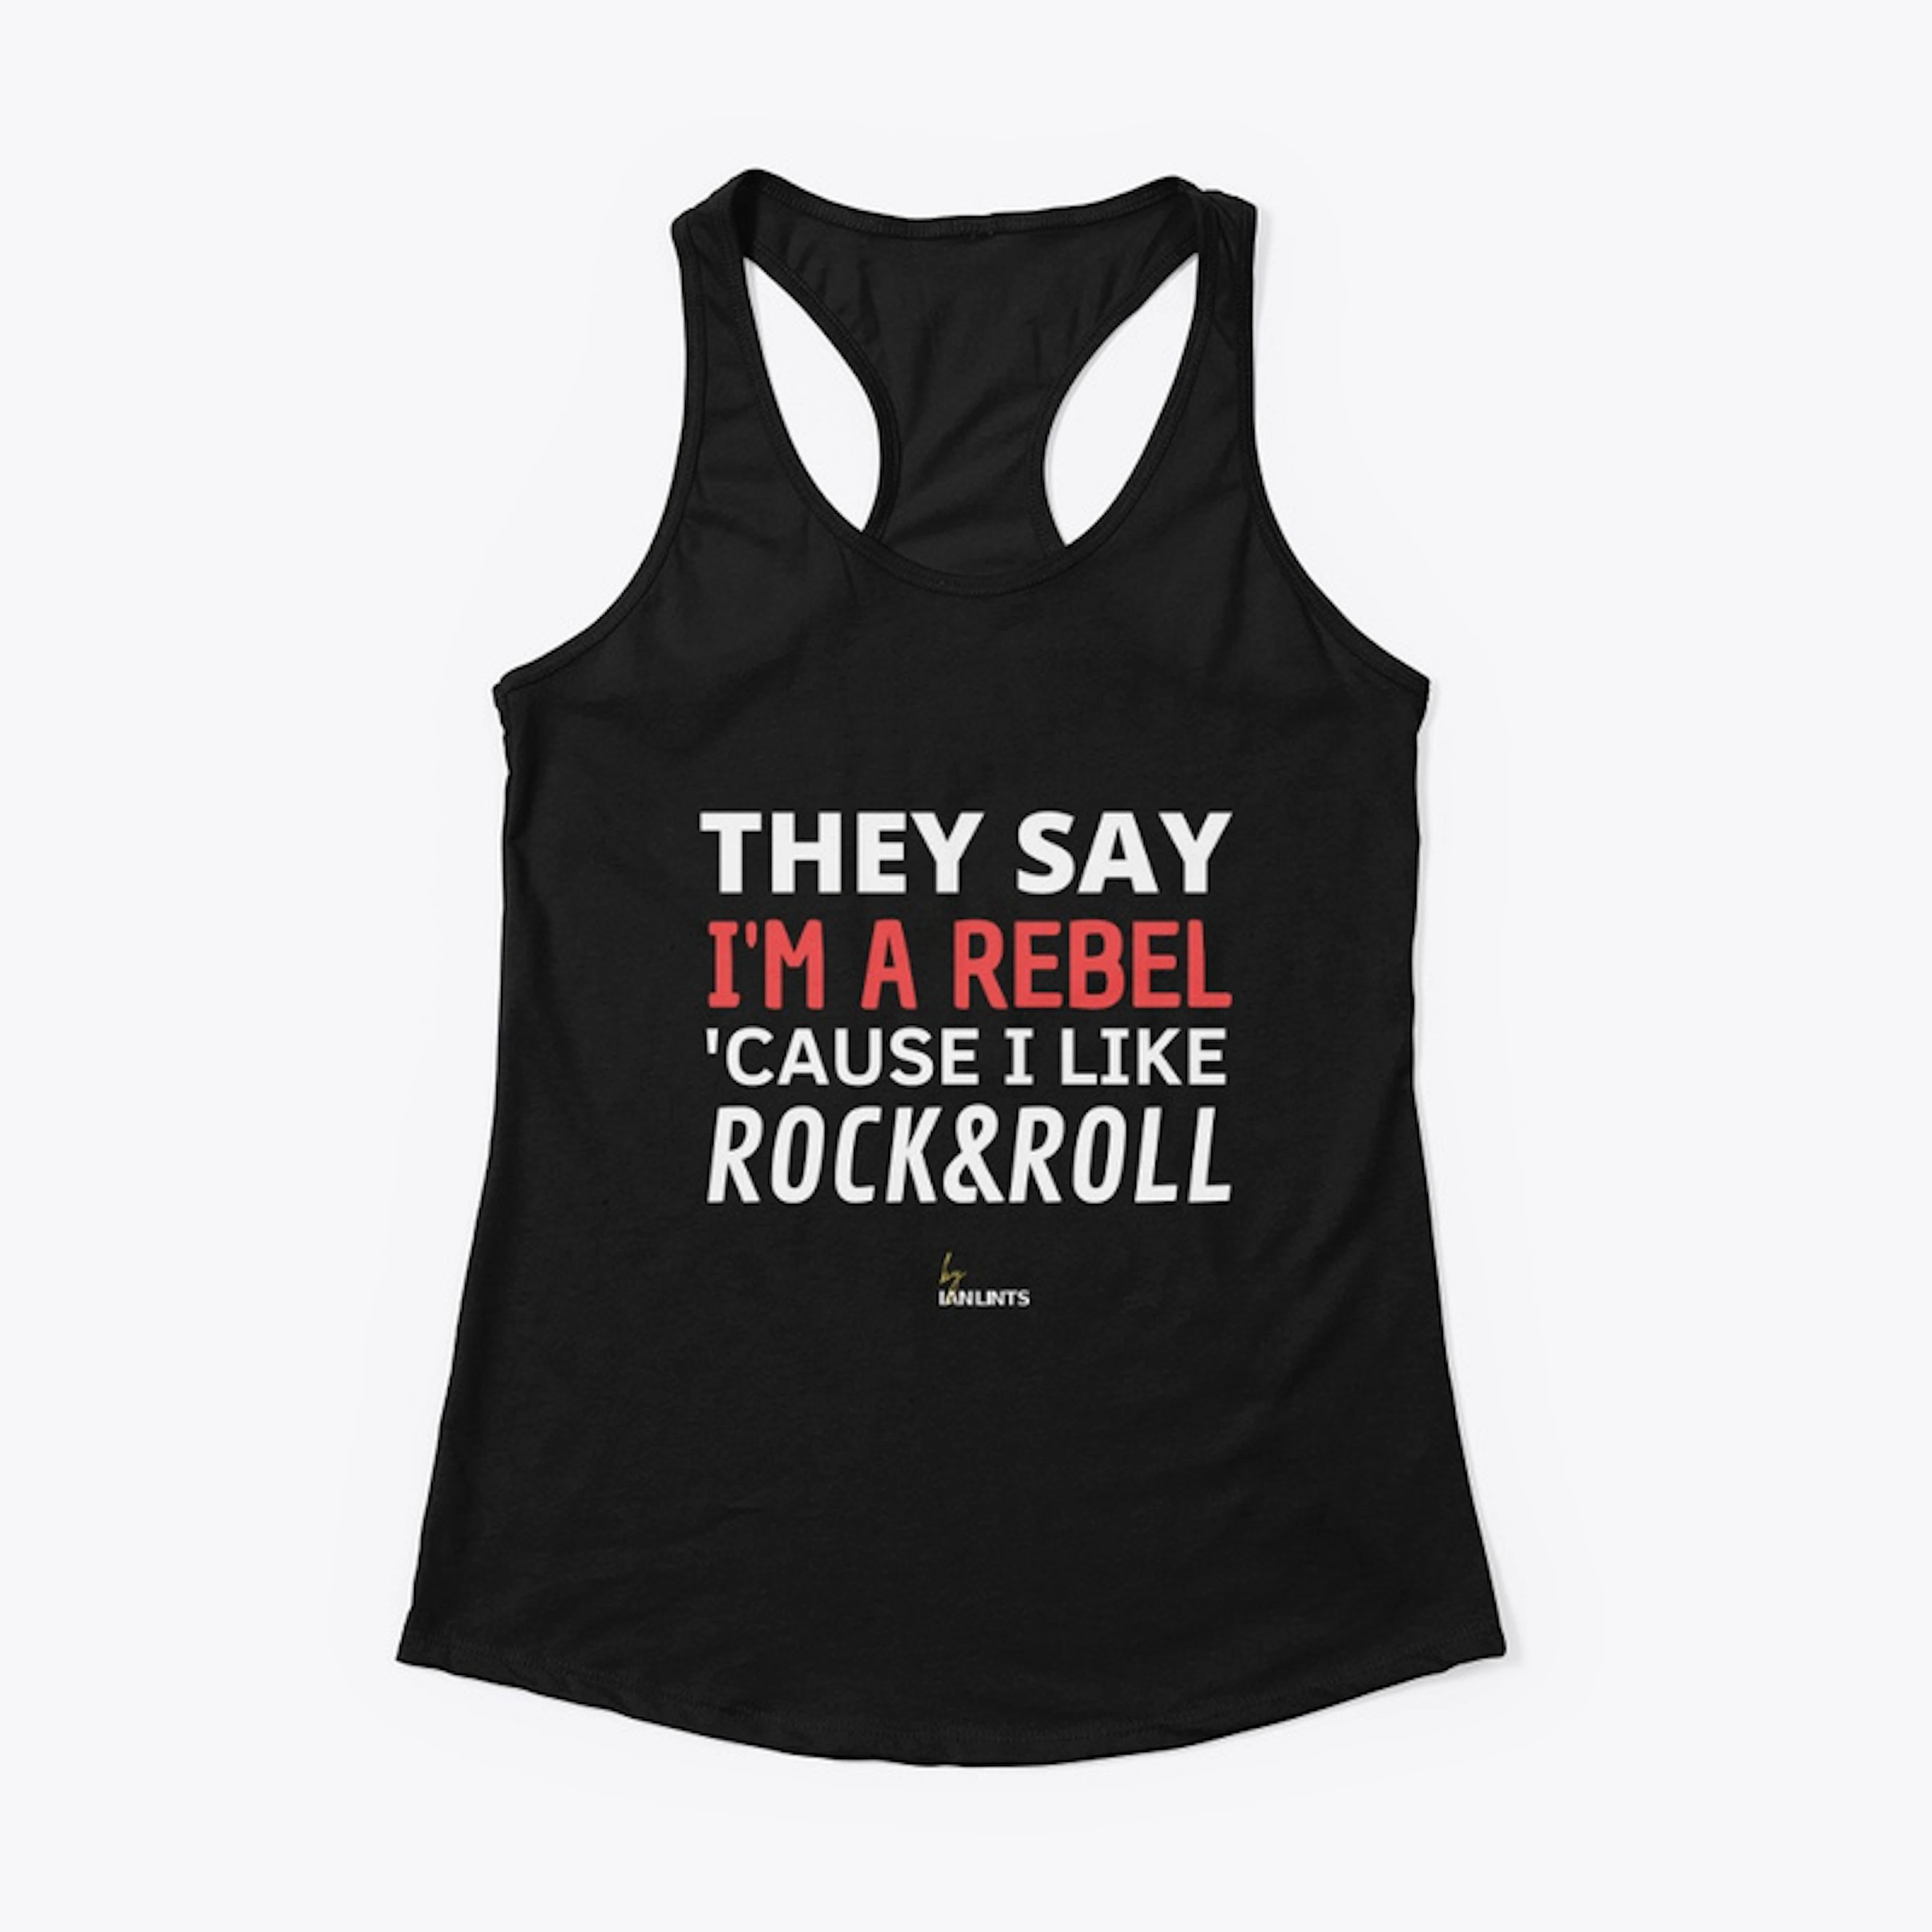 Be a rebel one!